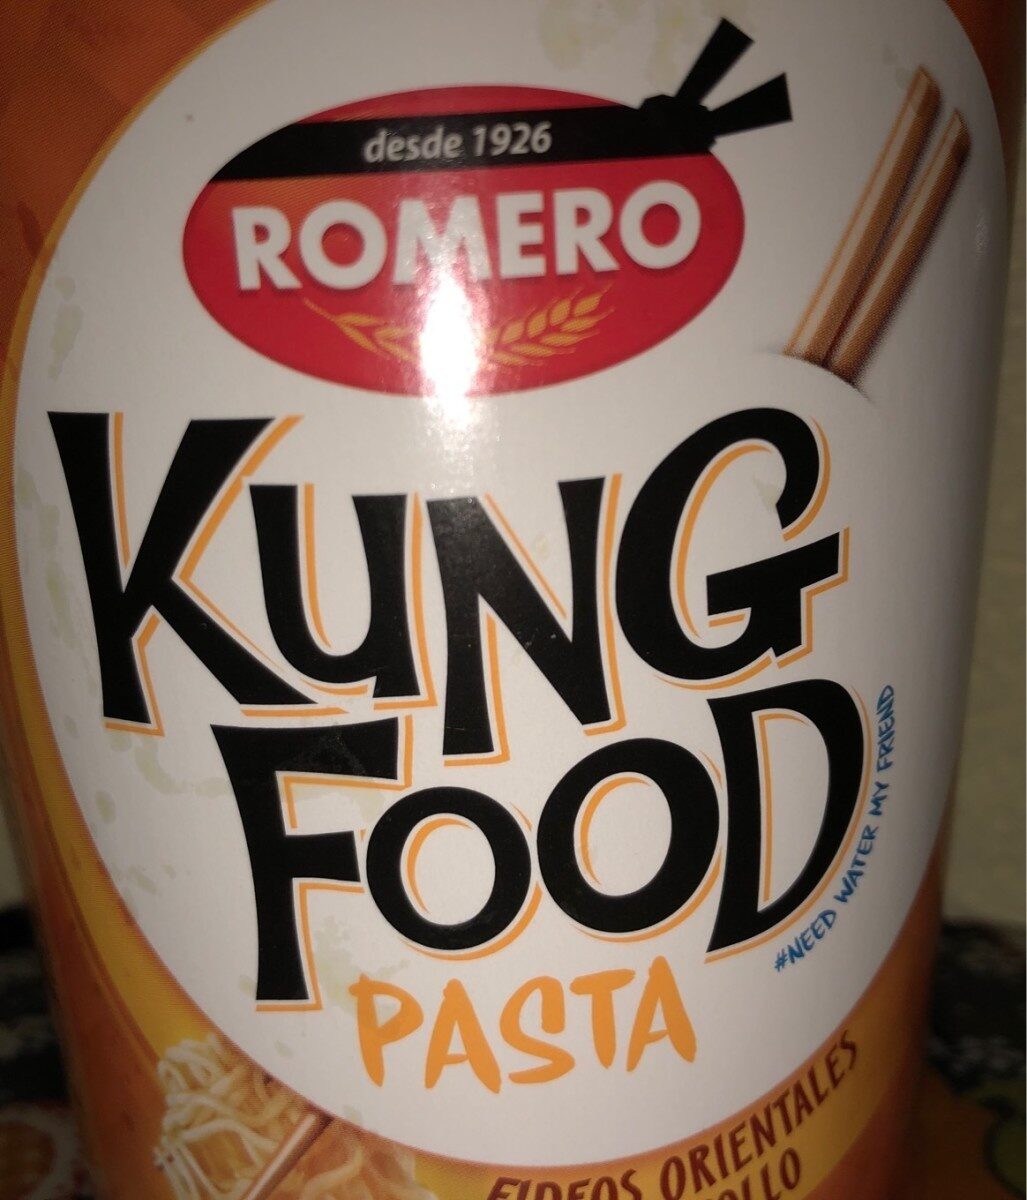 Kung food pasta fideos orientales - Producte - es